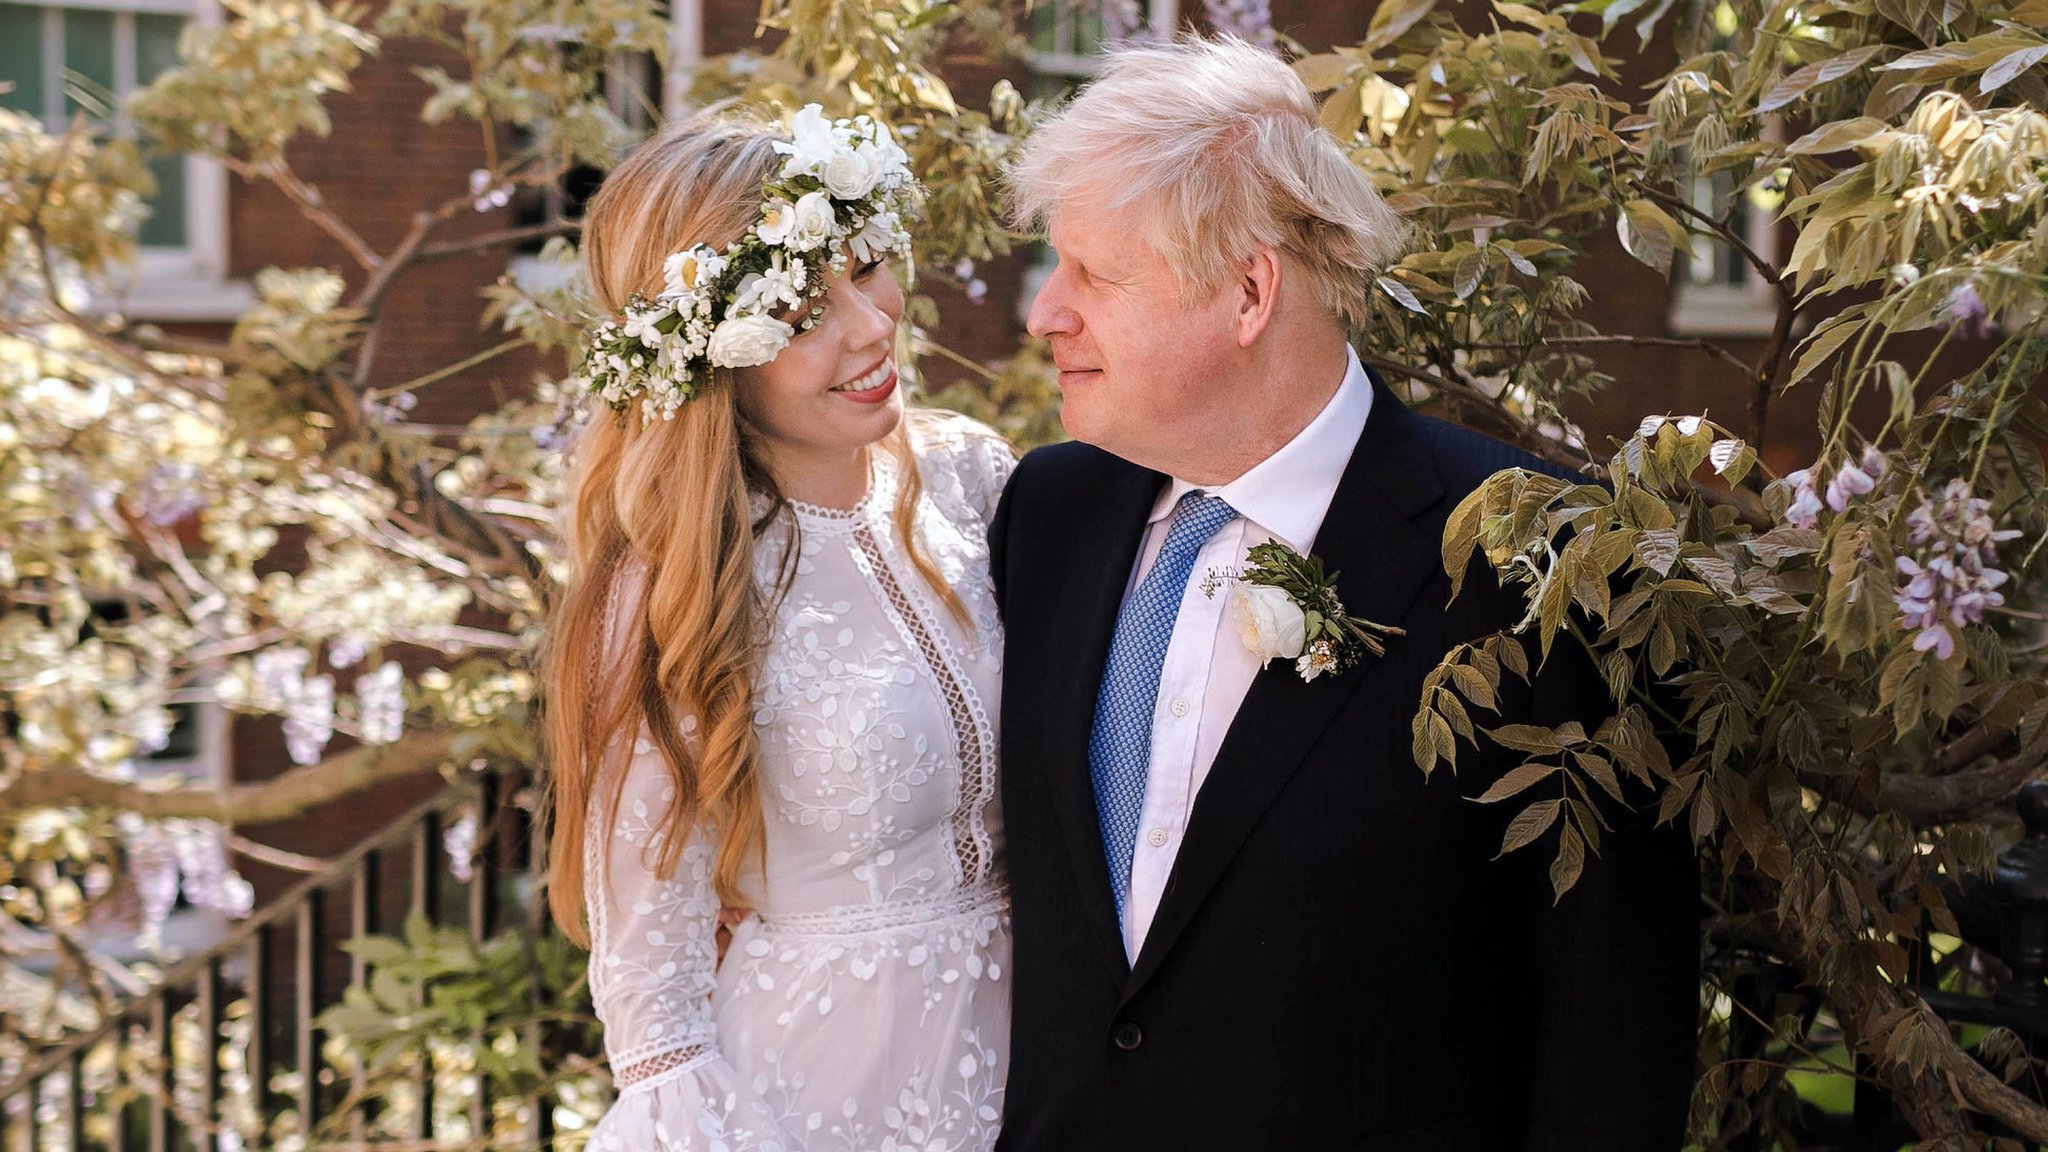 Rebecca Fulton/Downing Street/PA MediaBoris Johnson marries Carrie Symonds at